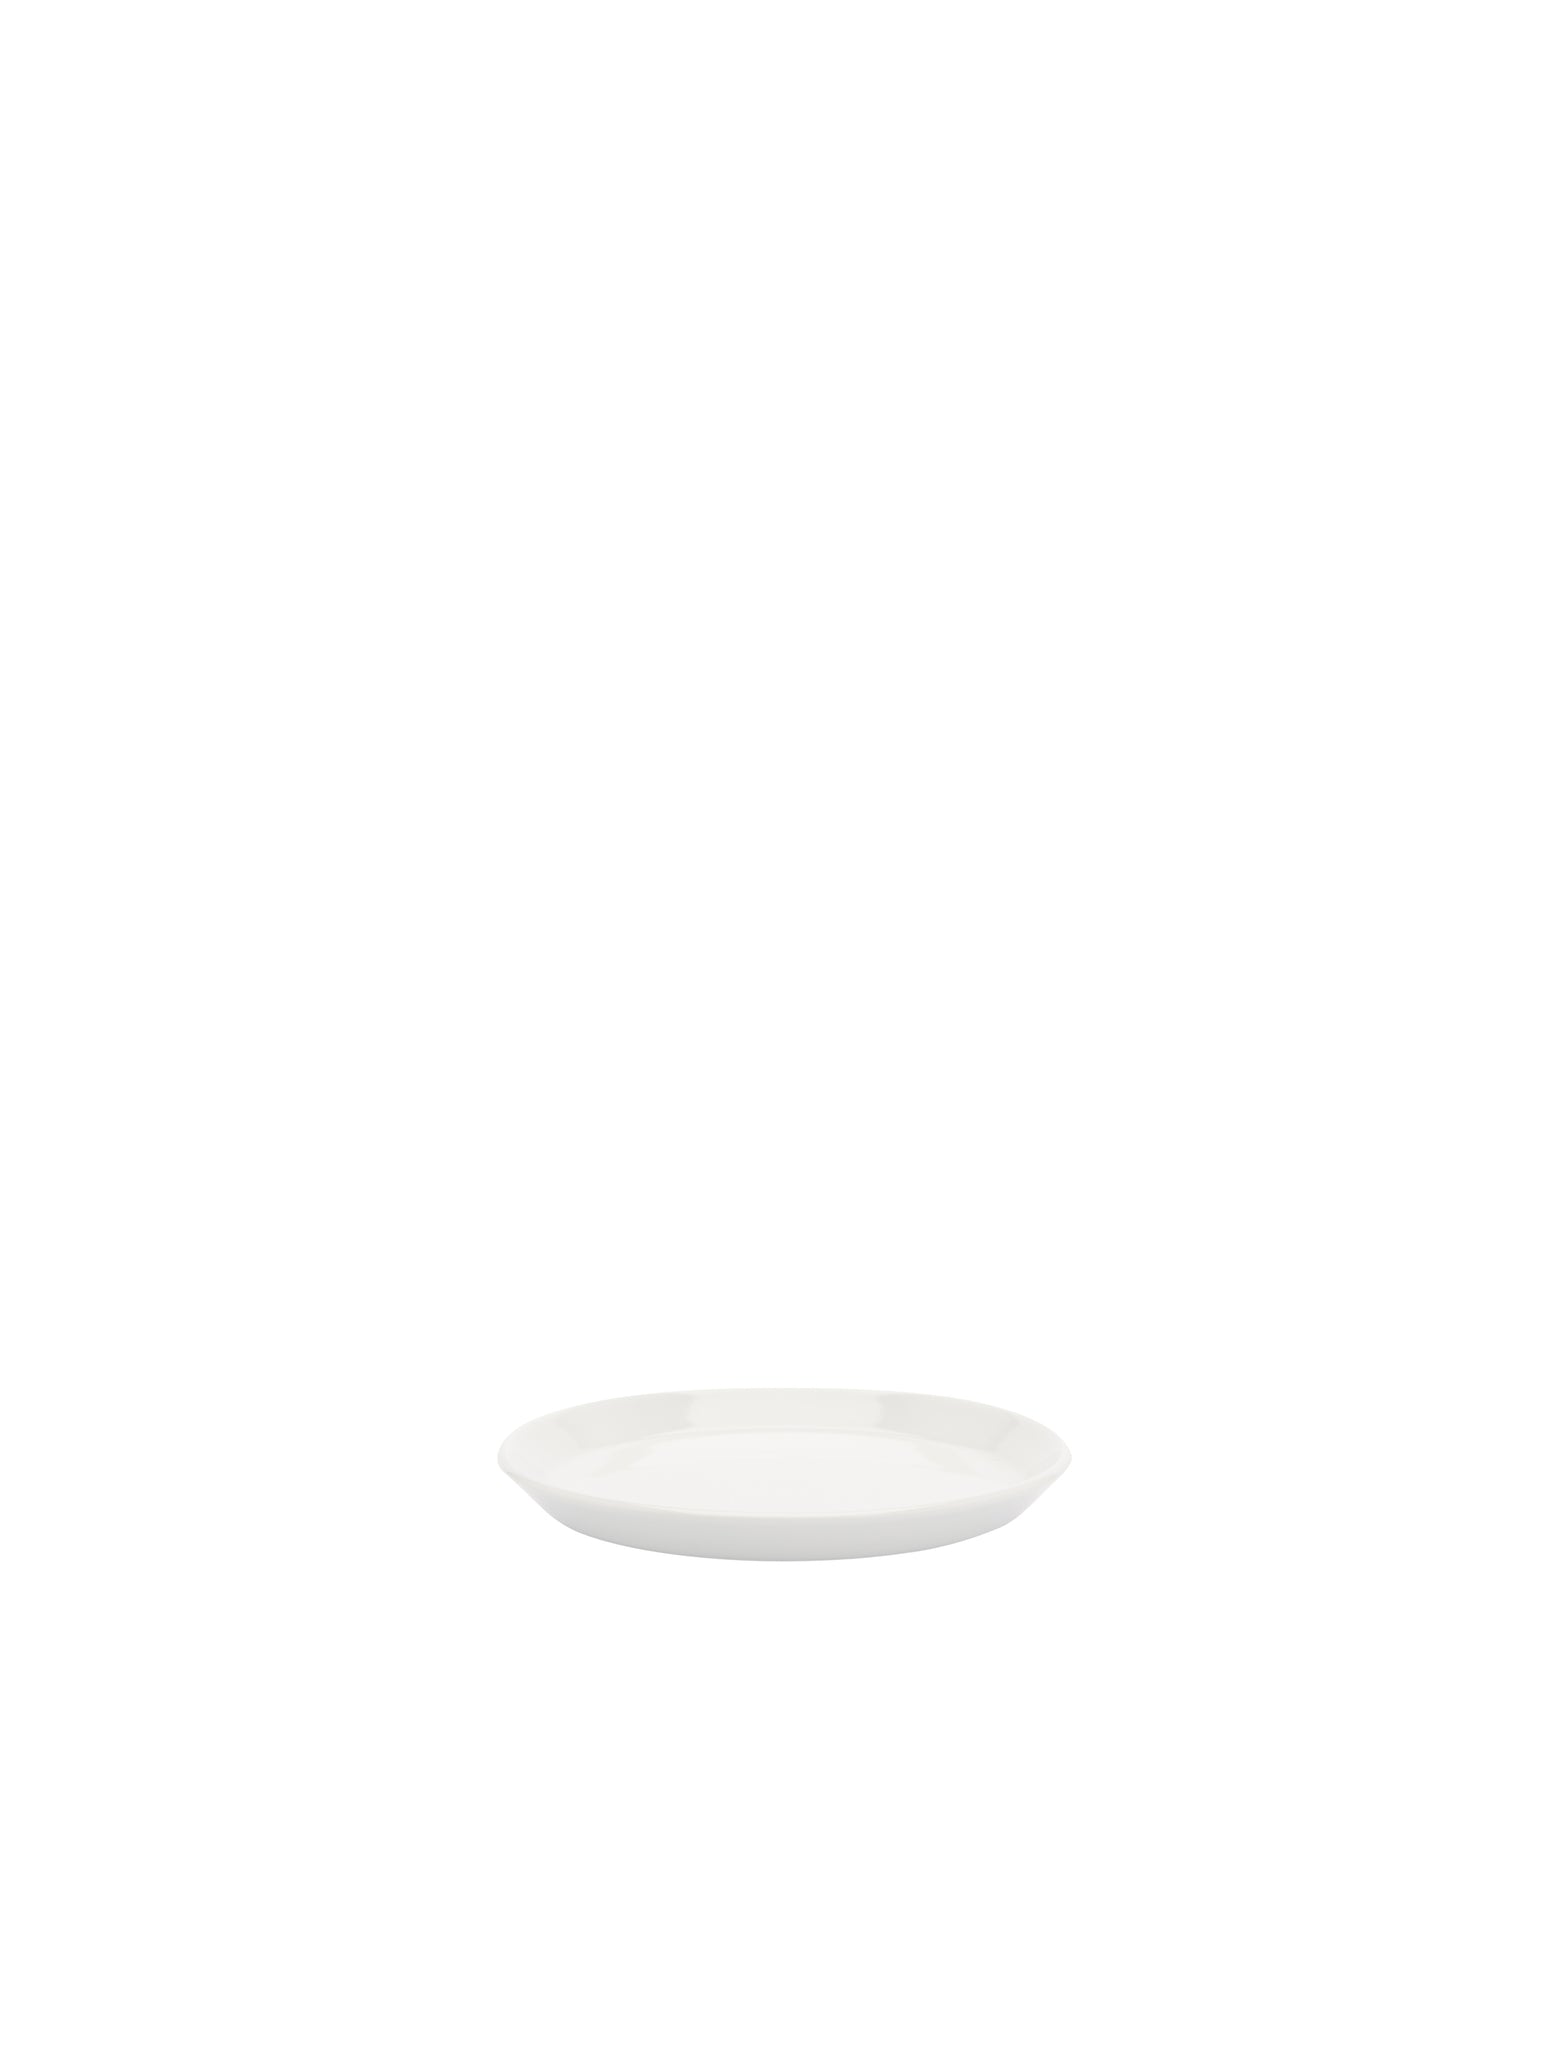 TY Round Plate 120 glazed white